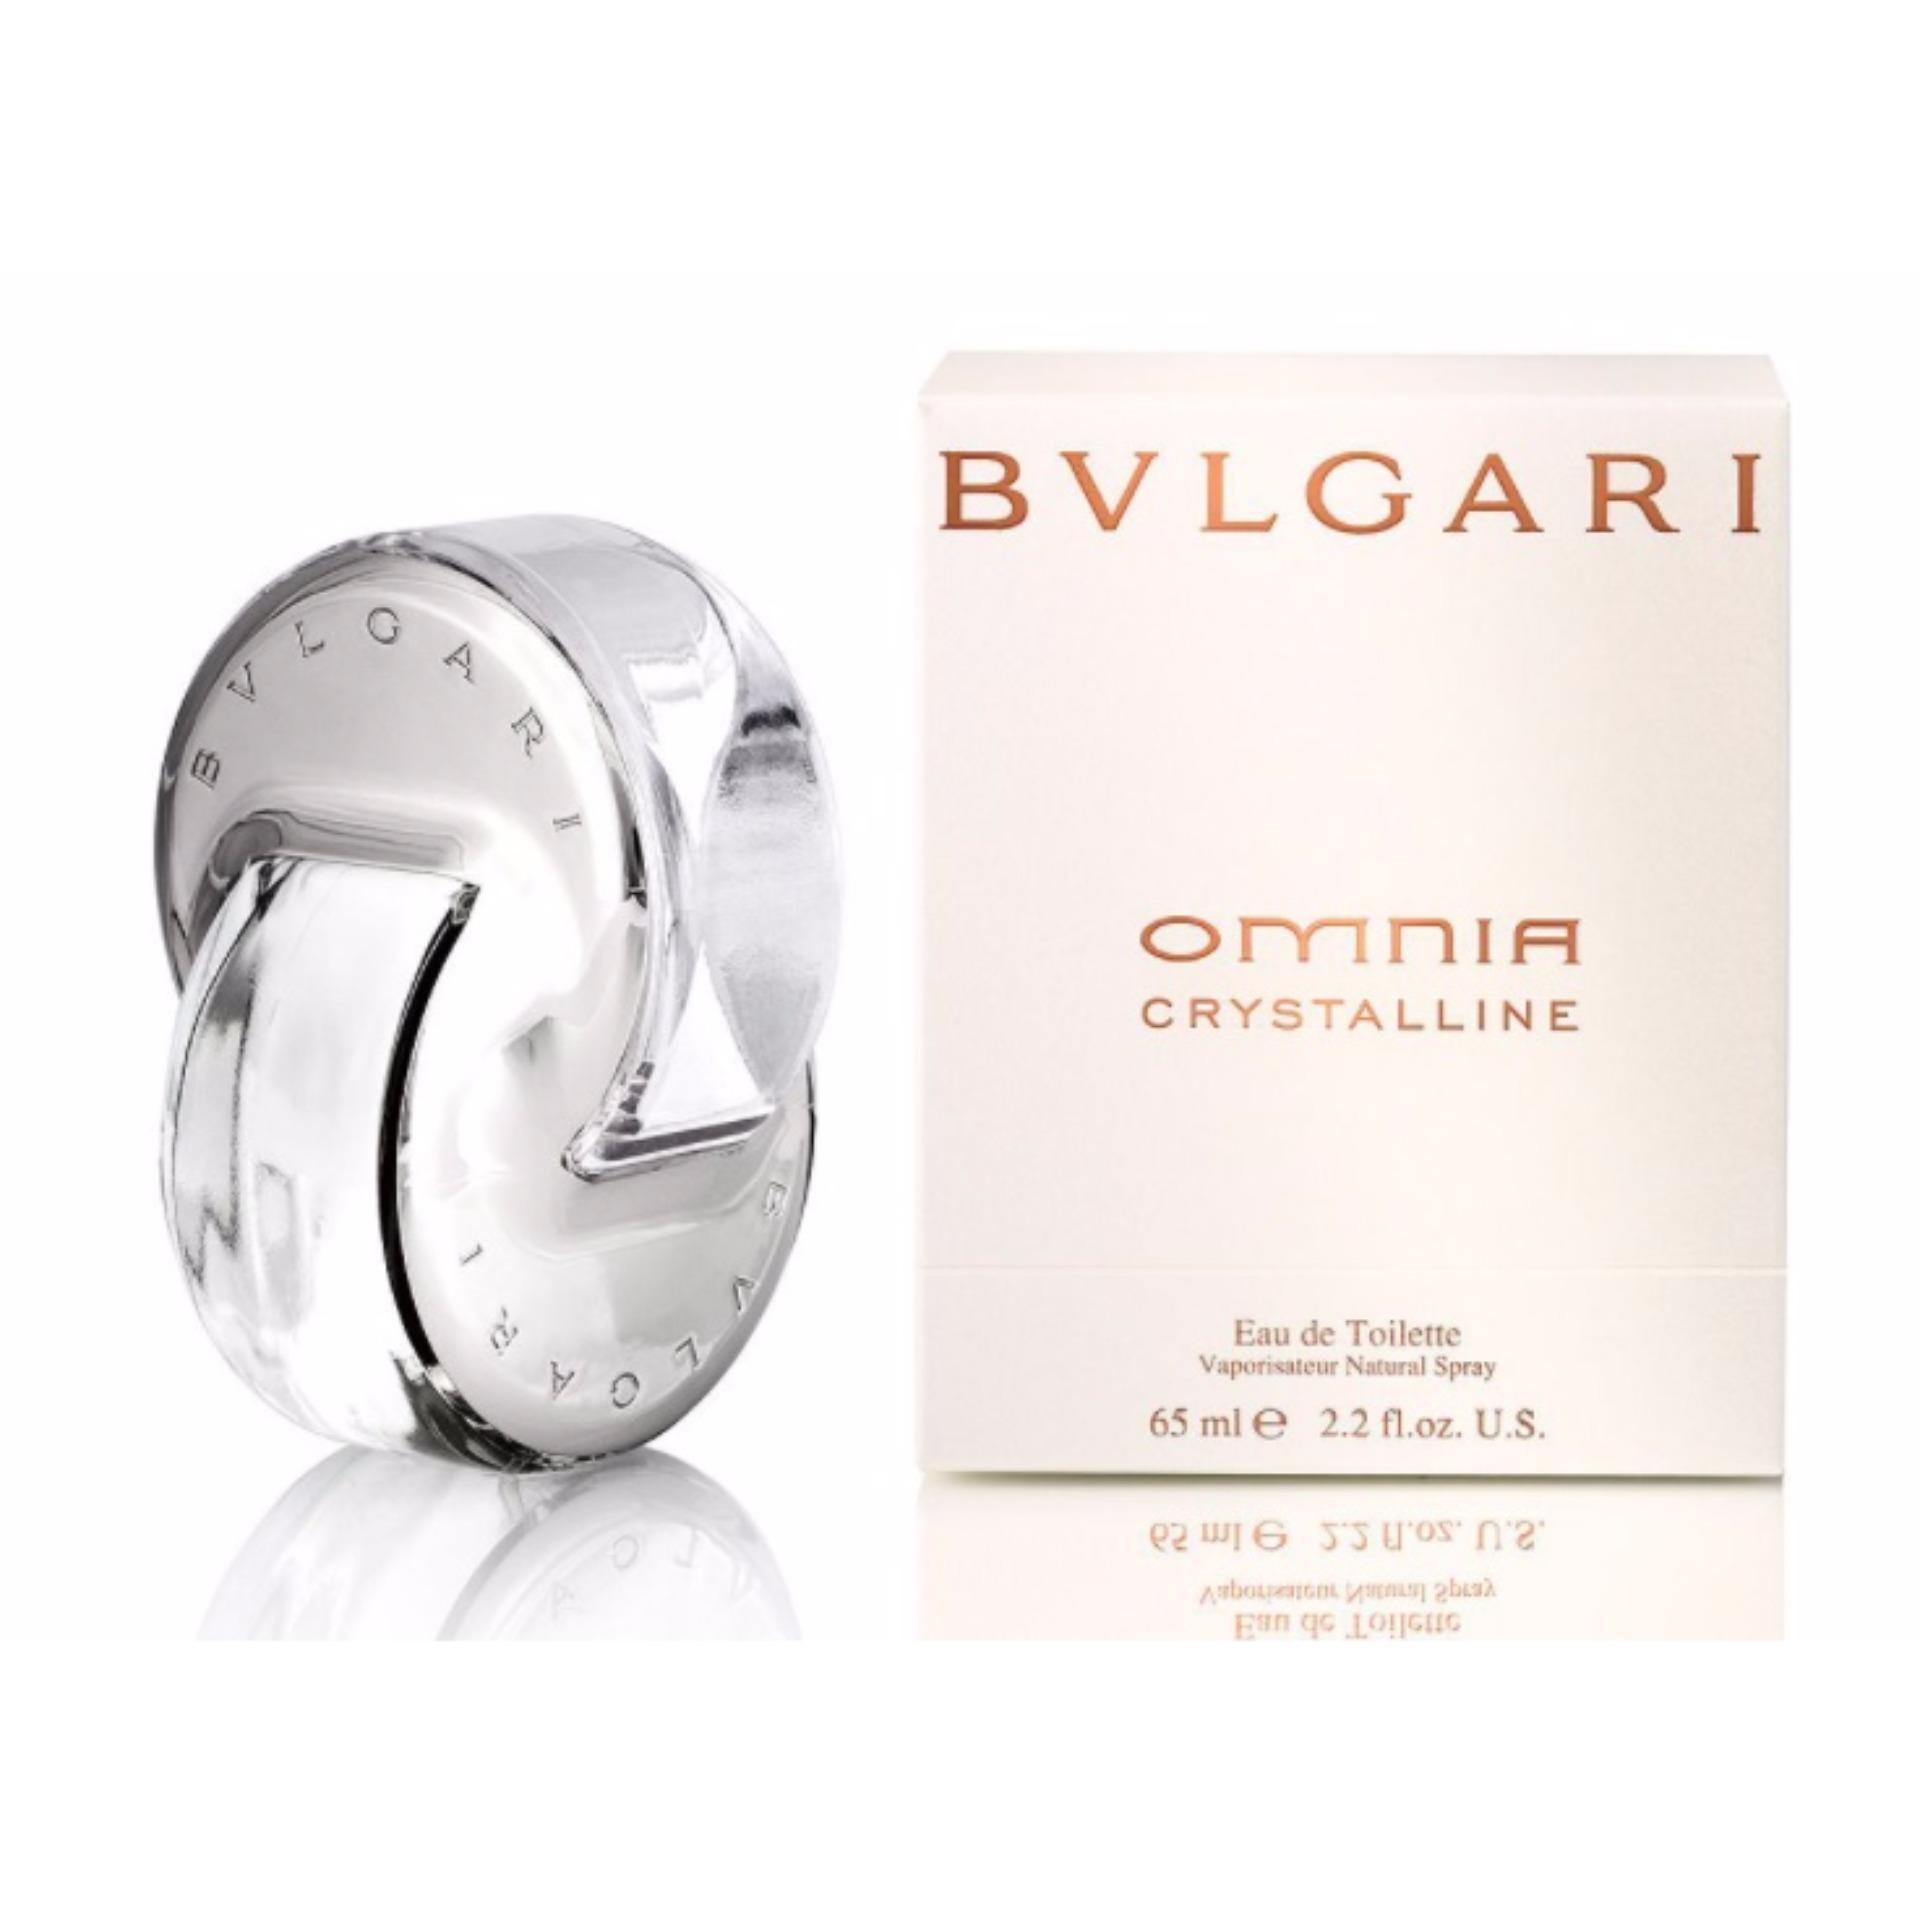 Bvlgari Omnia Crystalline review and price